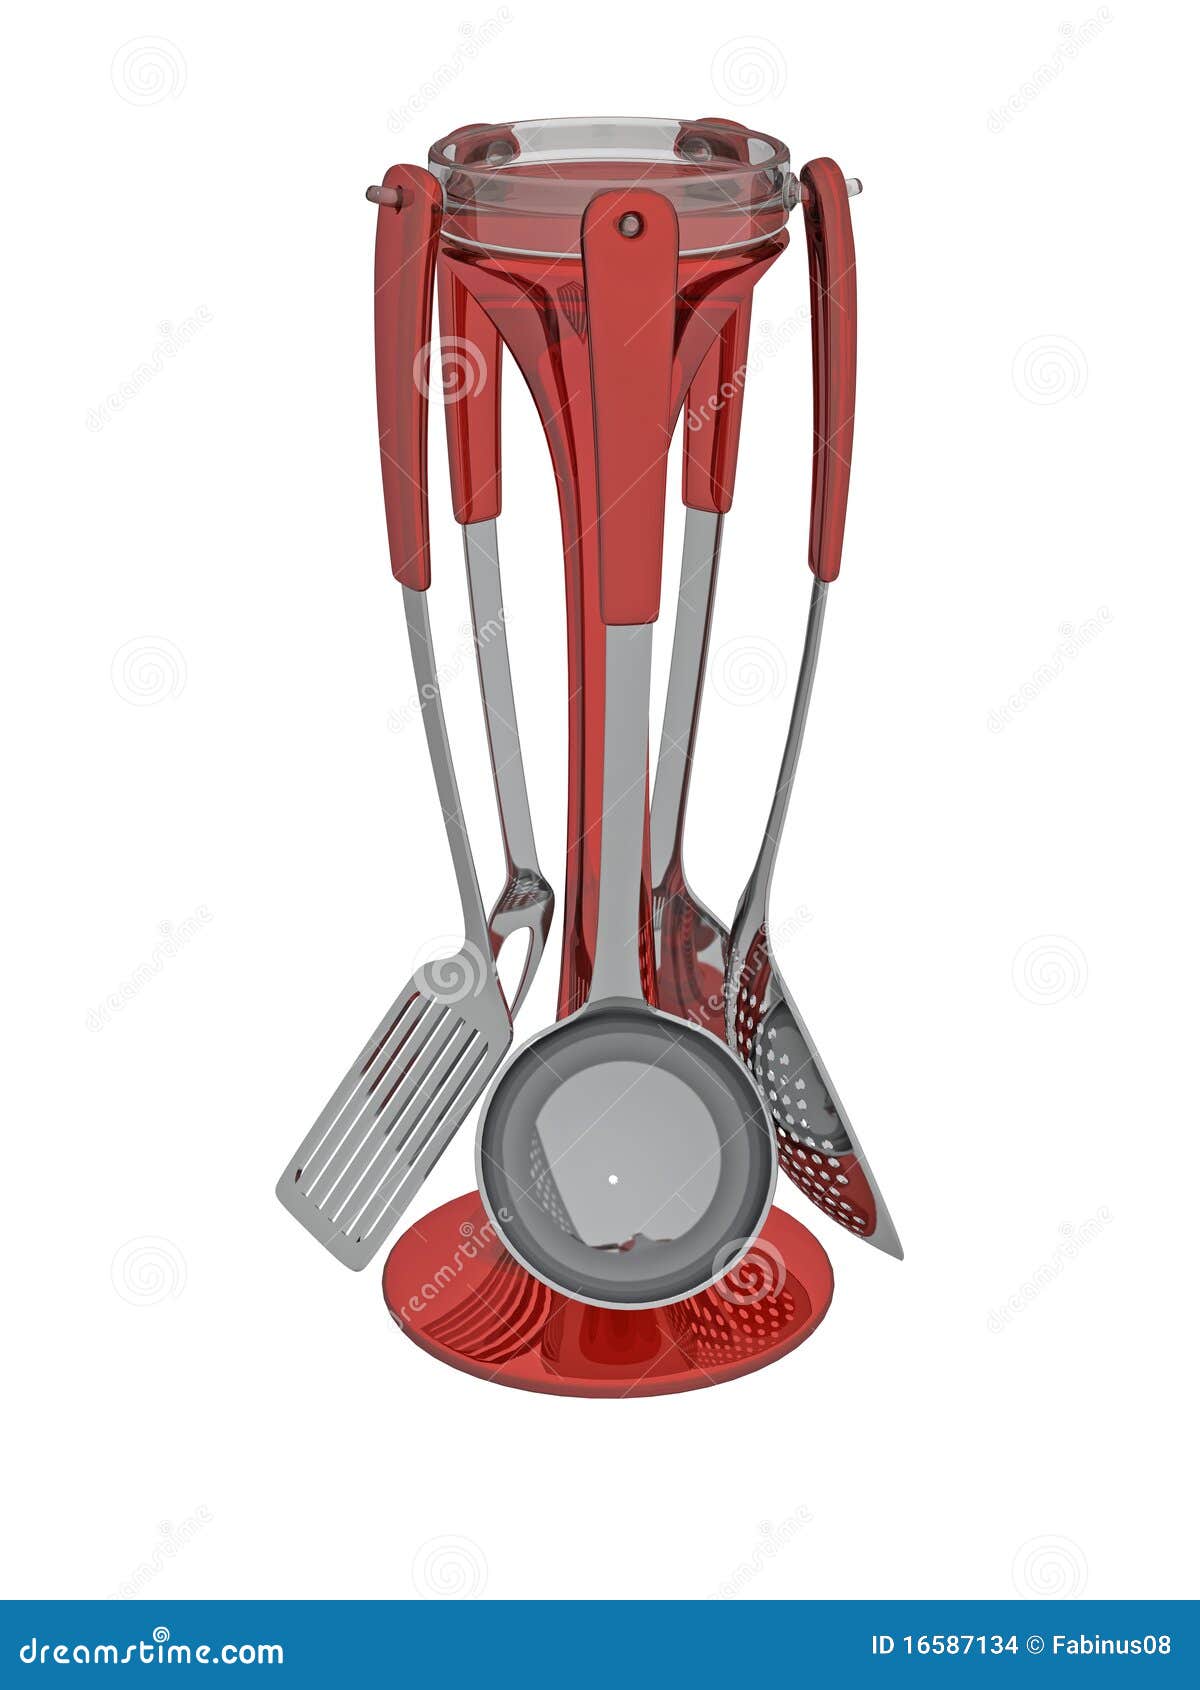 Illustrated set of modern kitchen utensils on circular rack, isolated ...